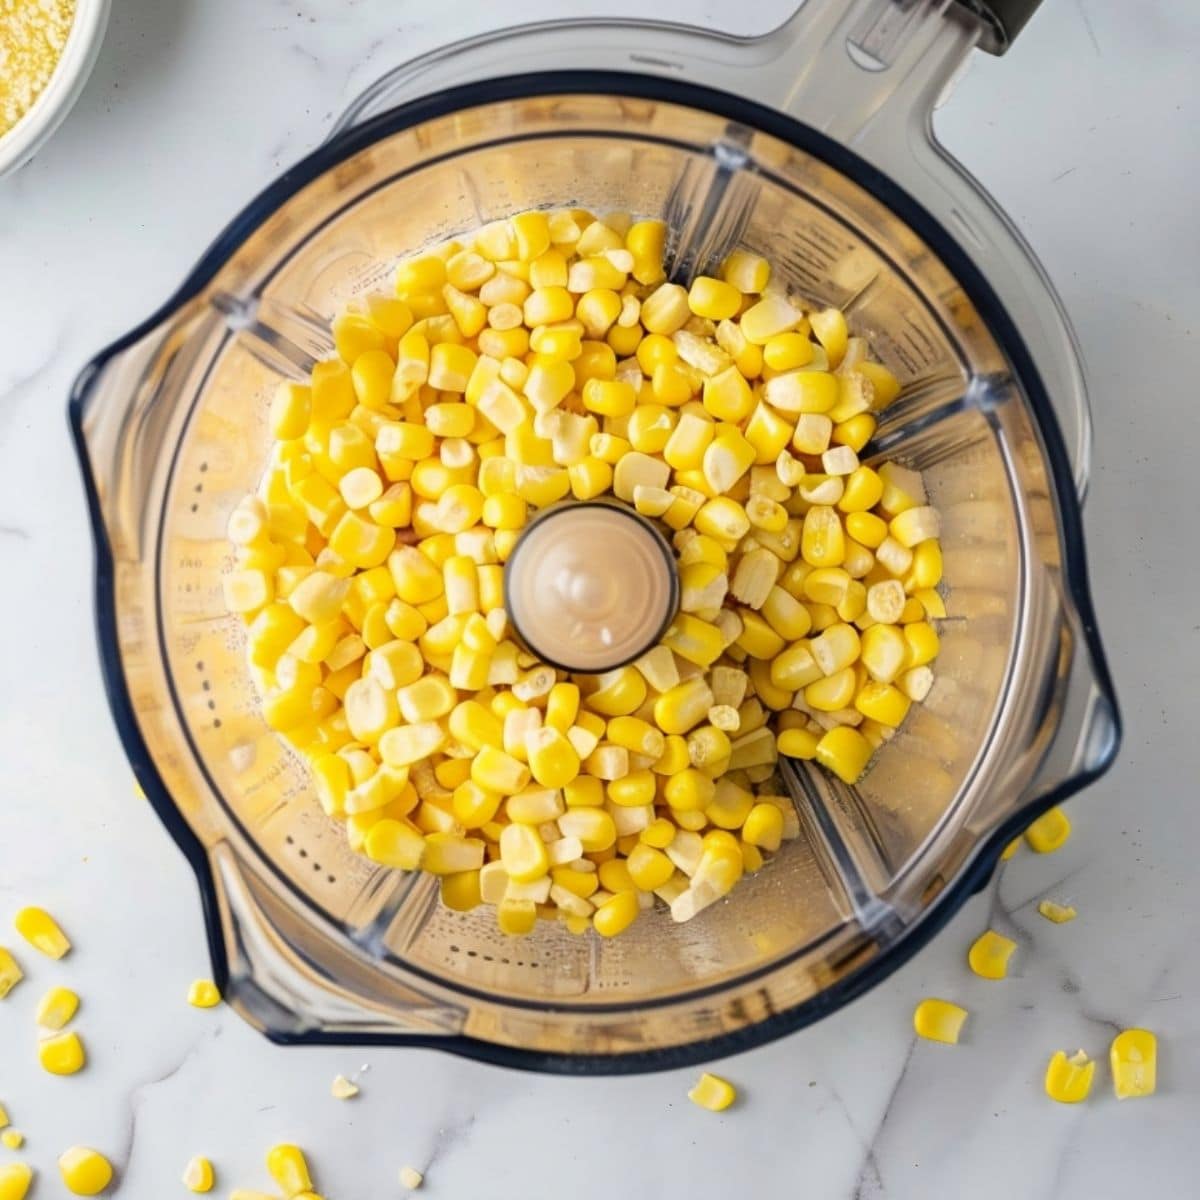 Corn kernels in a blender, overhead view